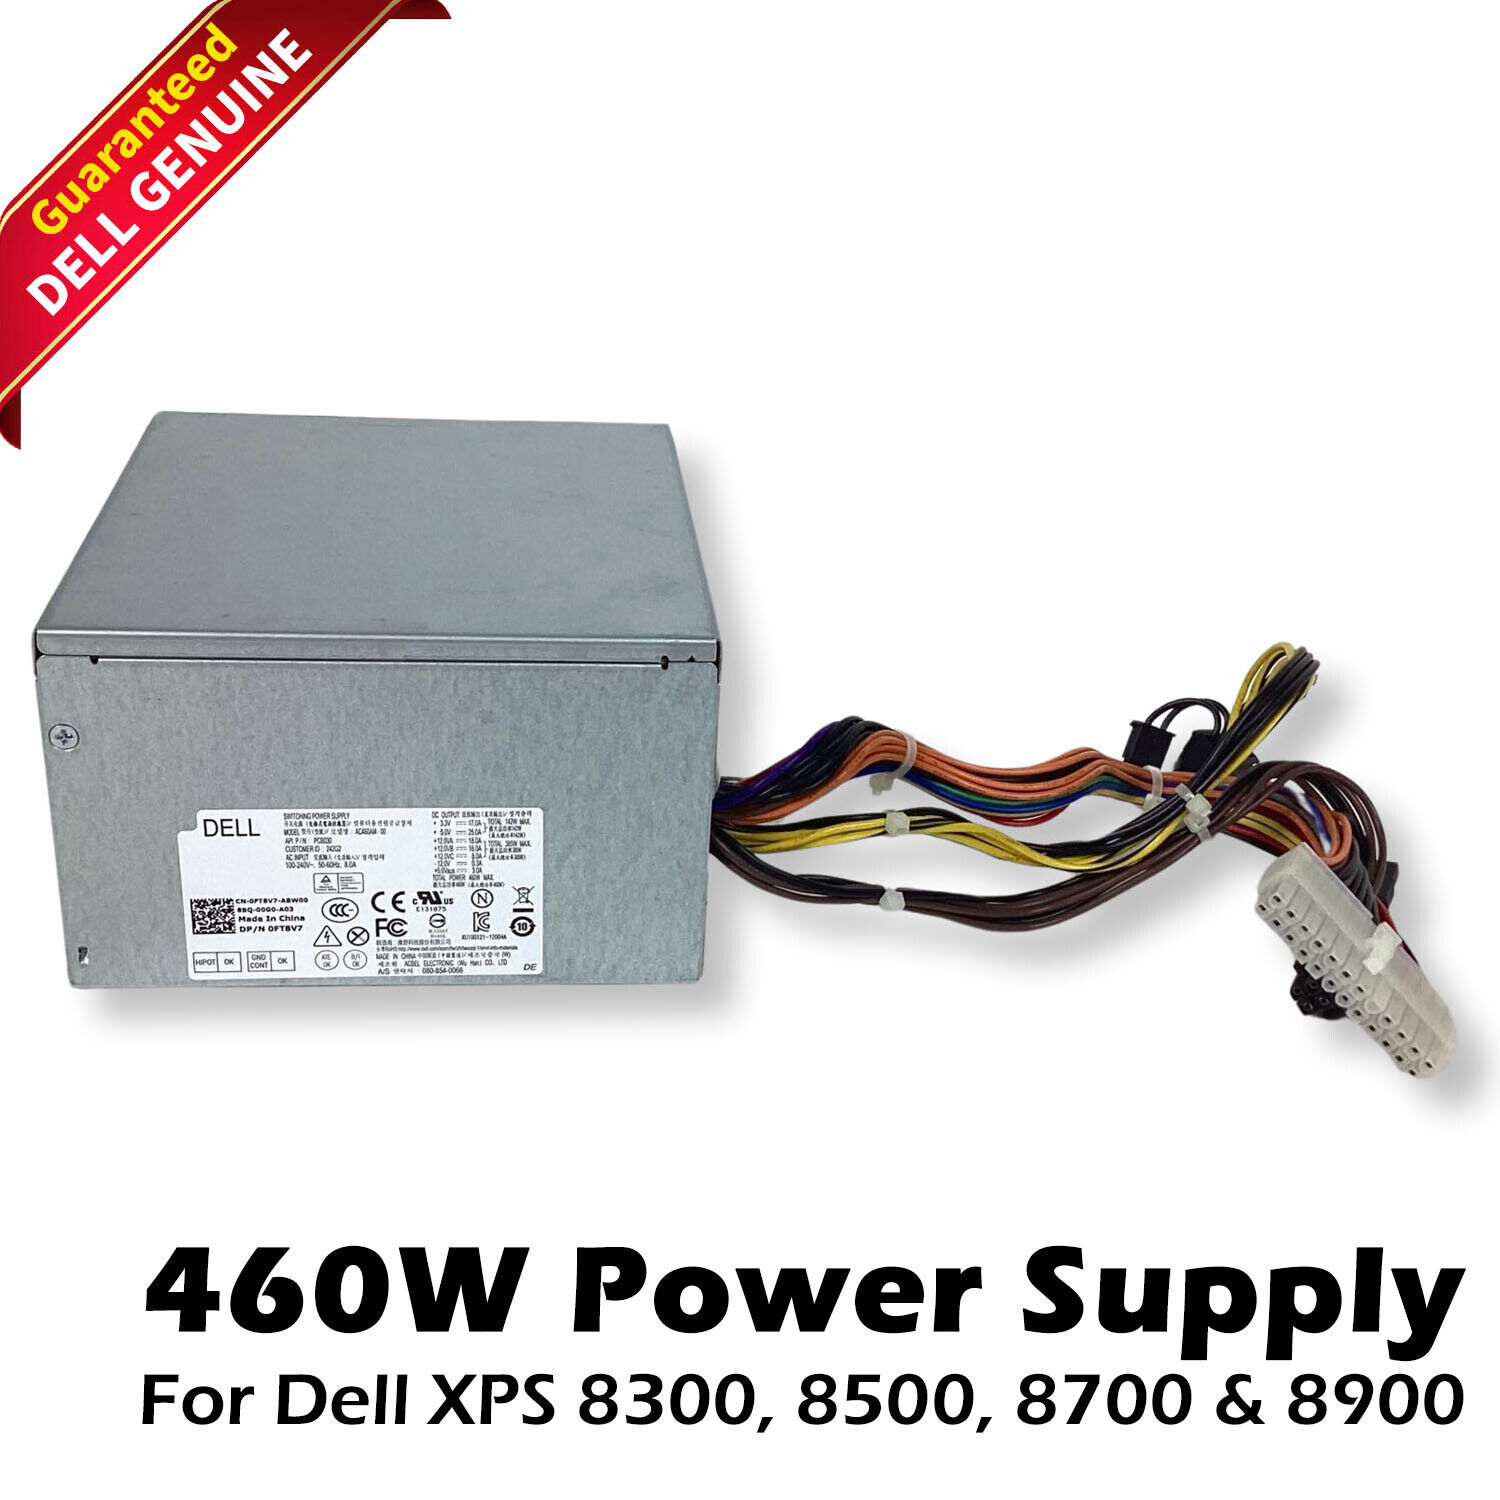 Genuine Dell XPS 8500 8700 8300 9000 Desktop Power Supply 460W AC460AM-00 FT8V7